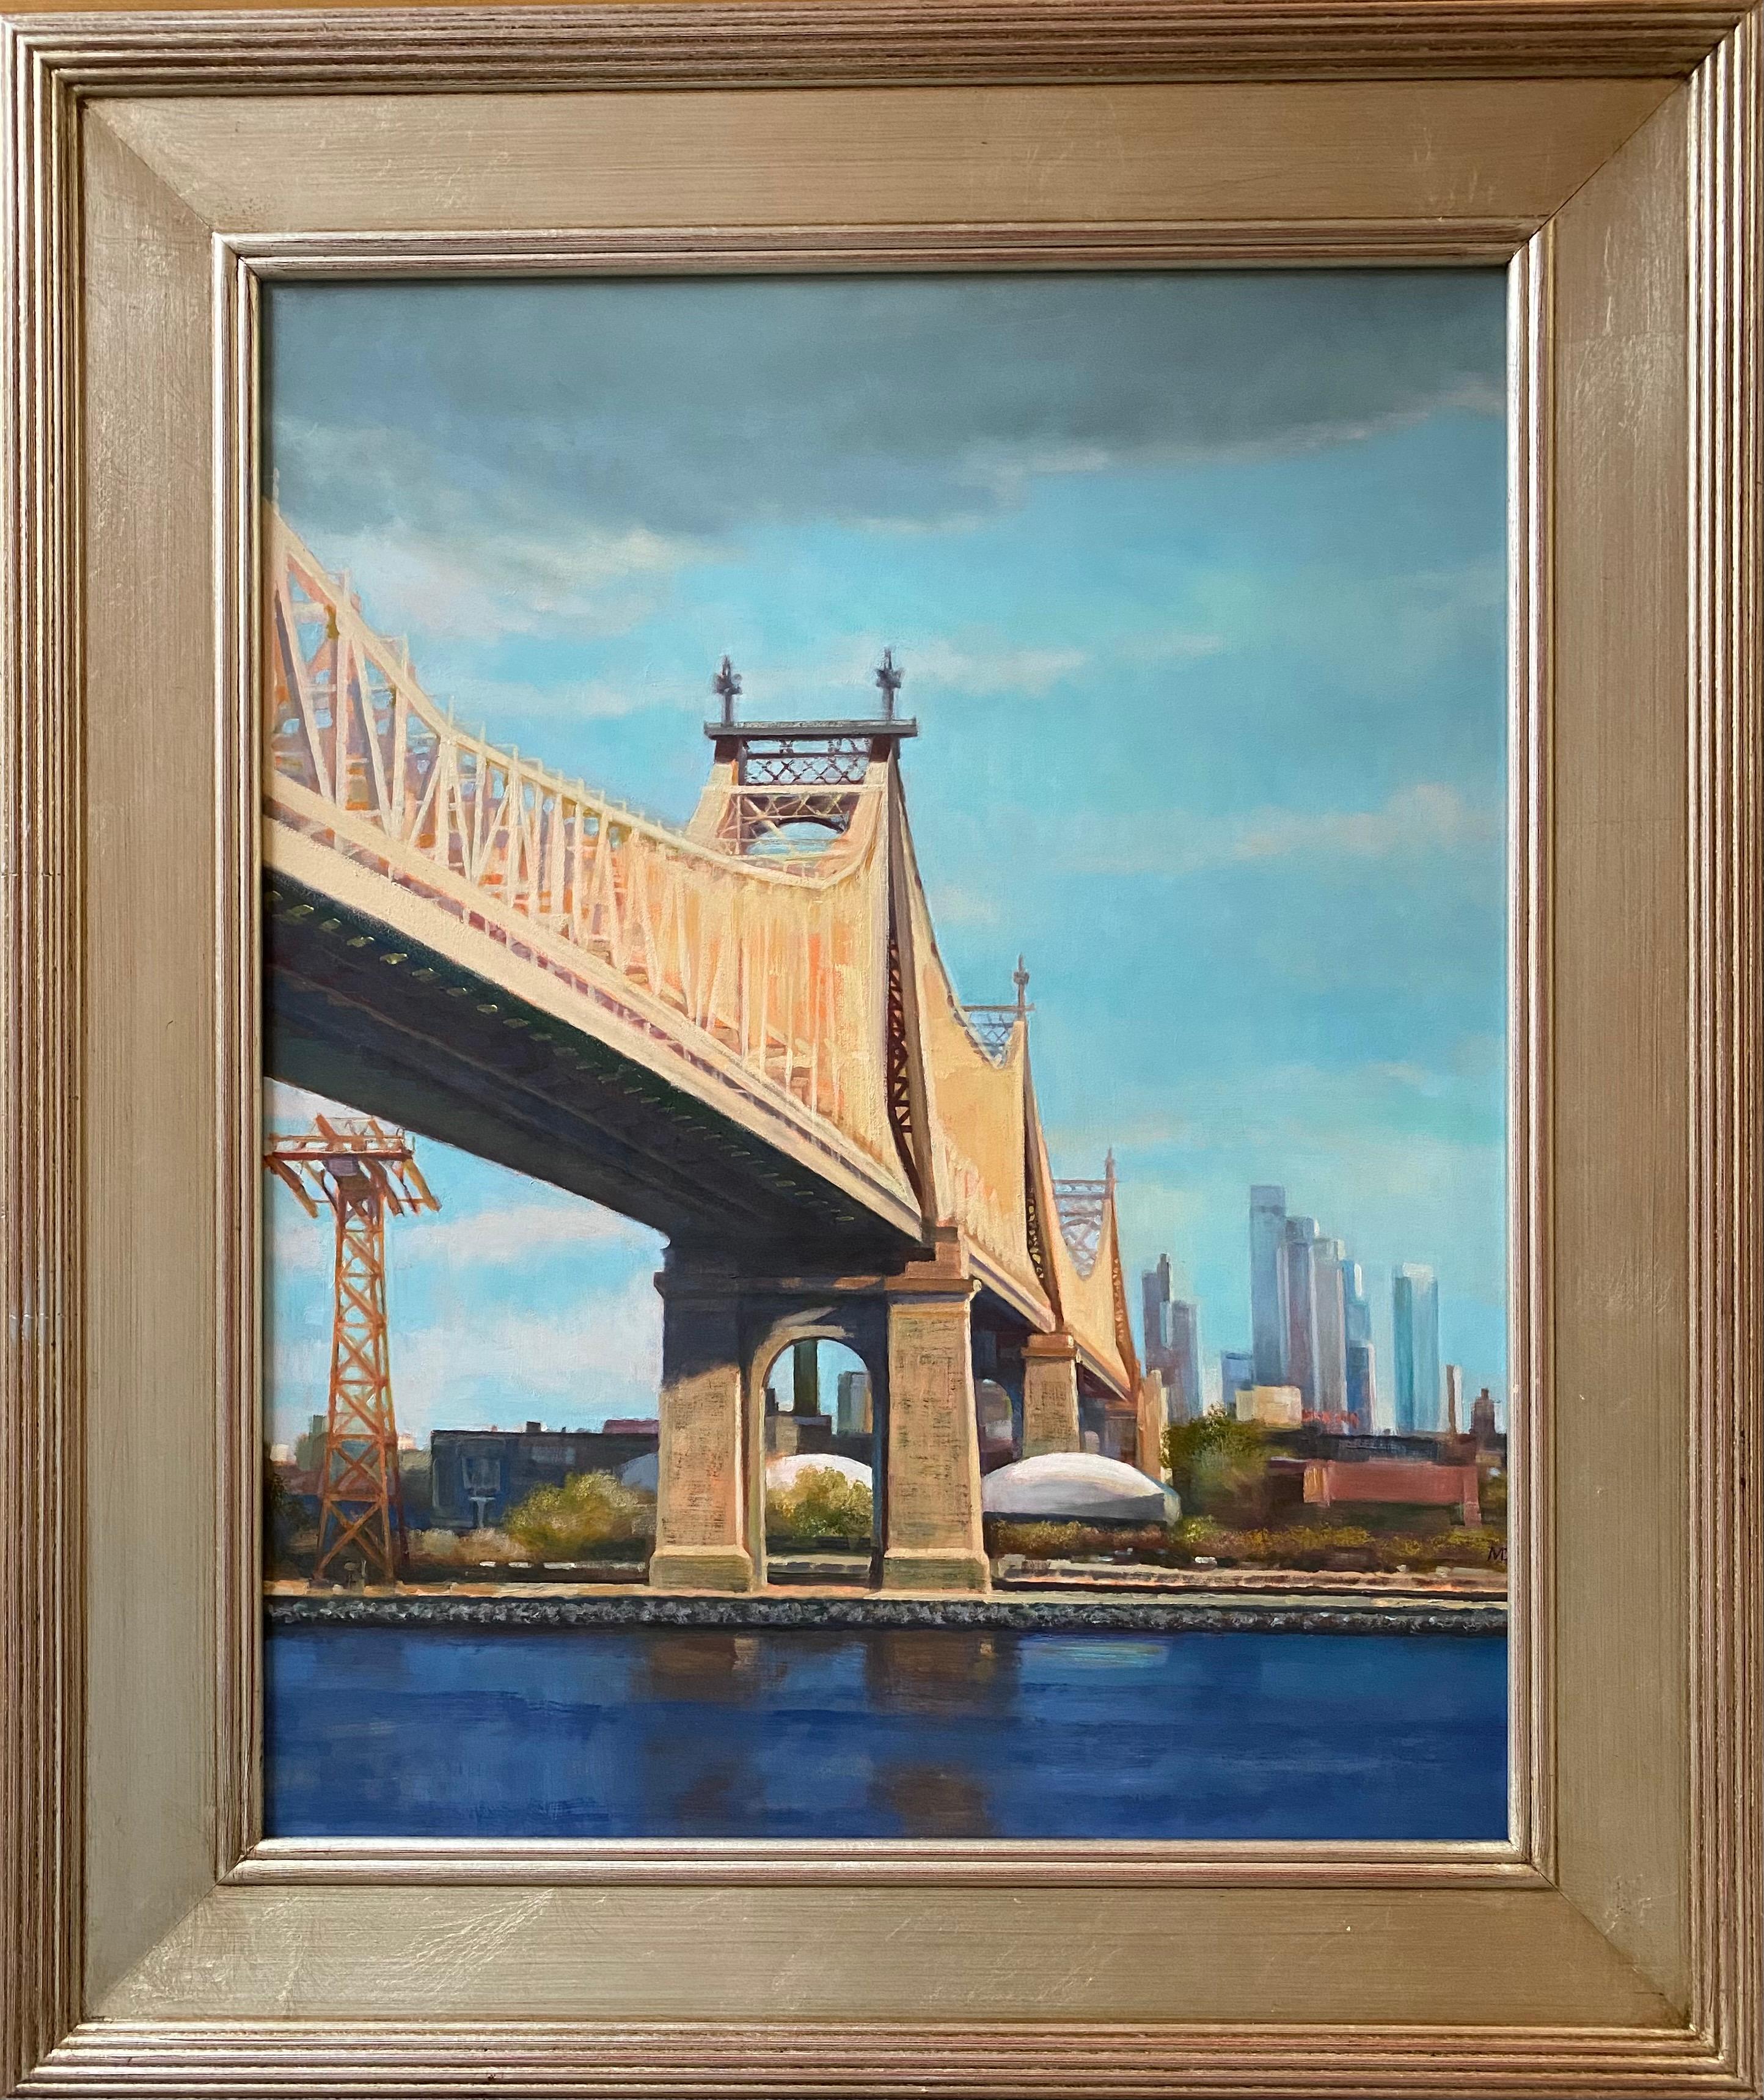 Michael Davis Landscape Painting - 59th Street Bridge, original realist New York City landscape